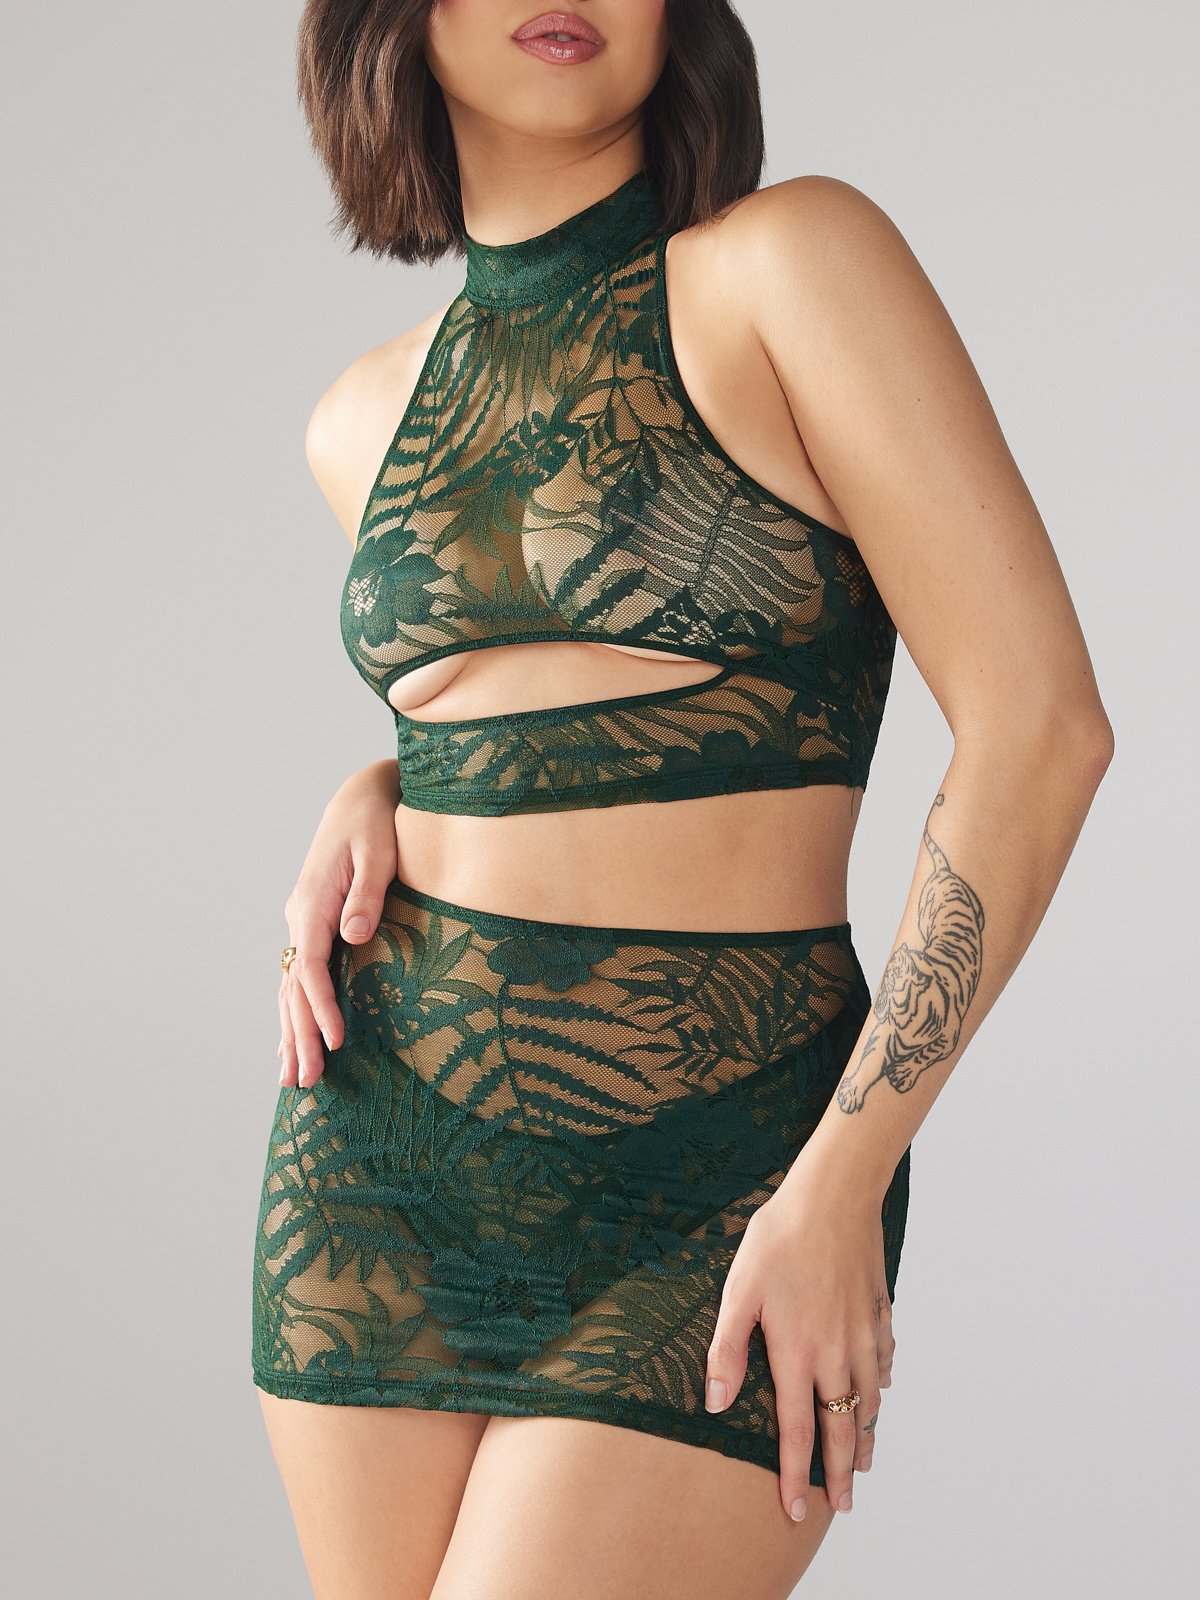 Shadowplay Lace Keyhole Skirt in Green | SAVAGE X FENTY